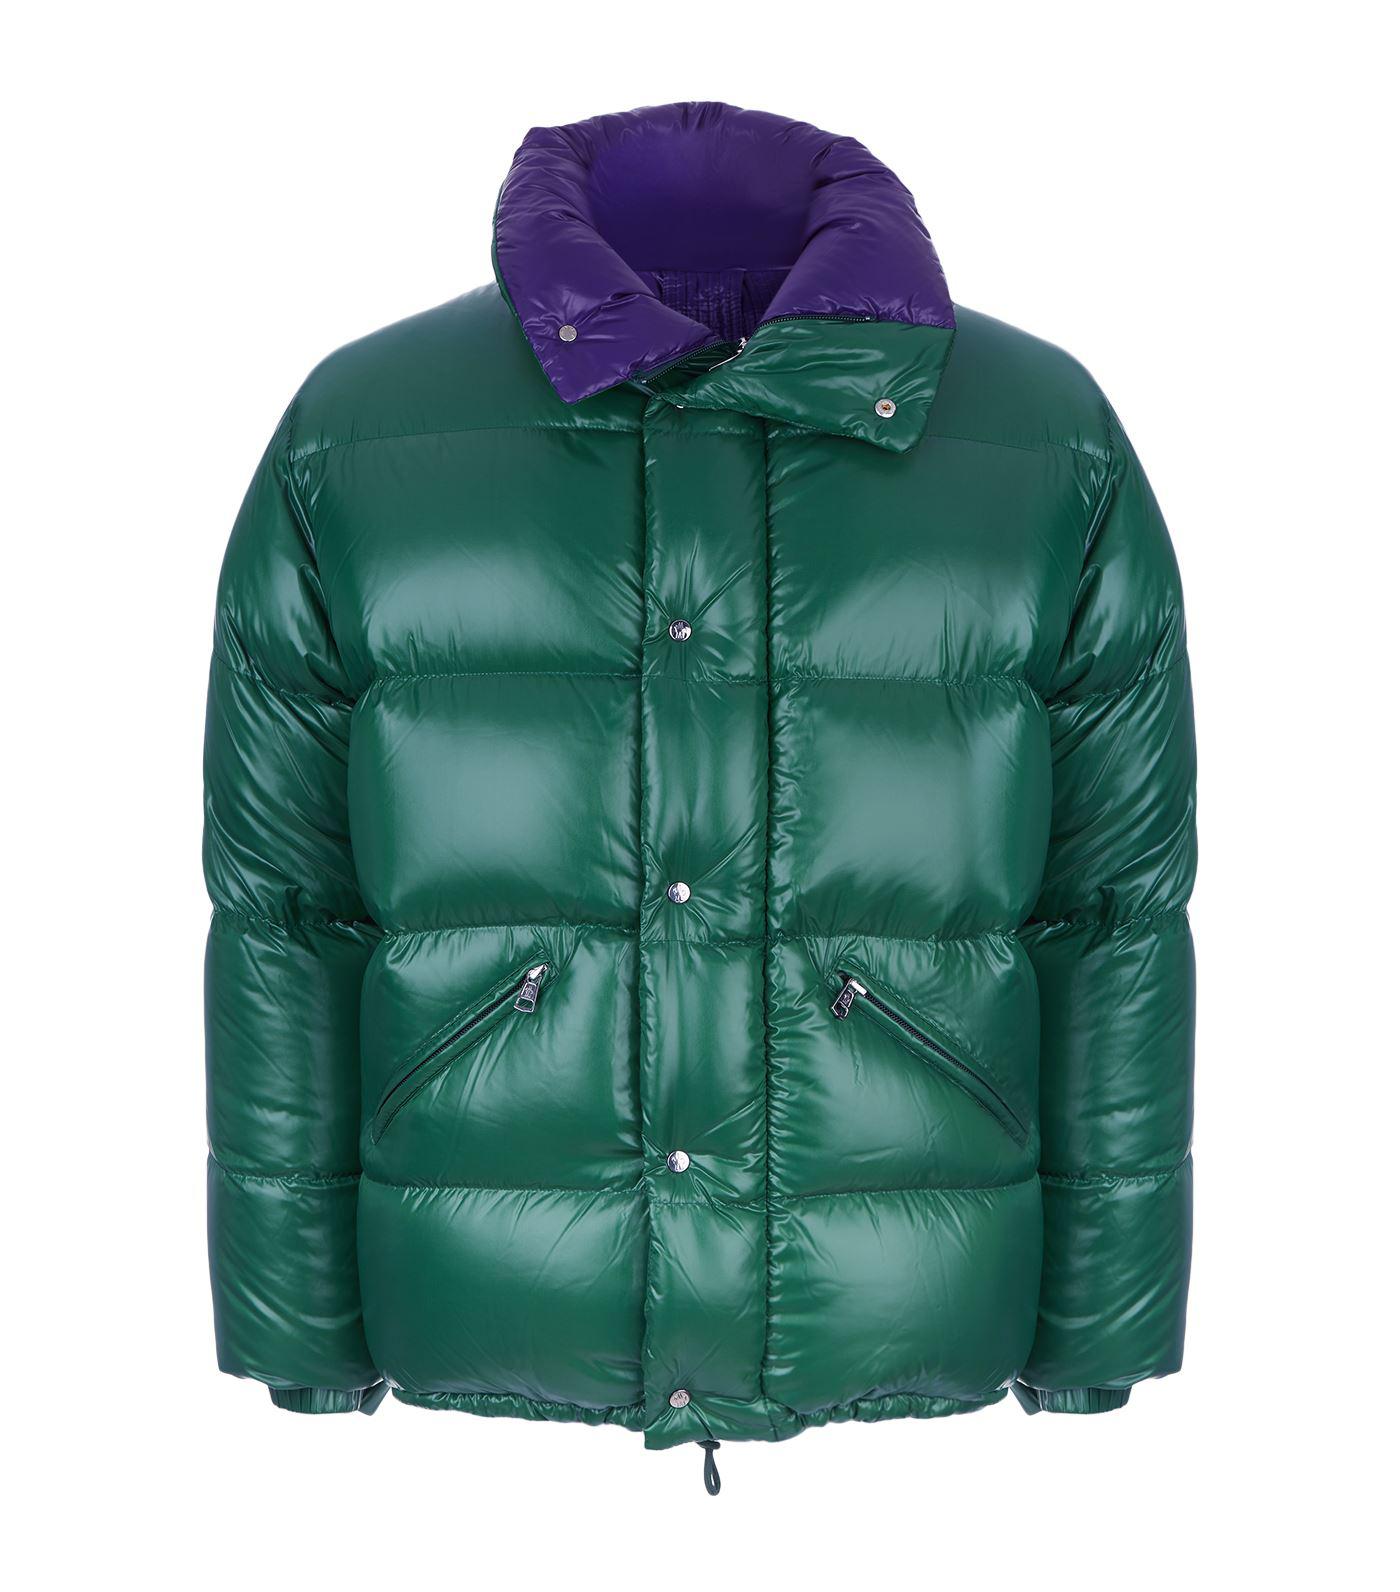 Moncler Goose Dejan Puffer Jacket in Green for Men - Lyst